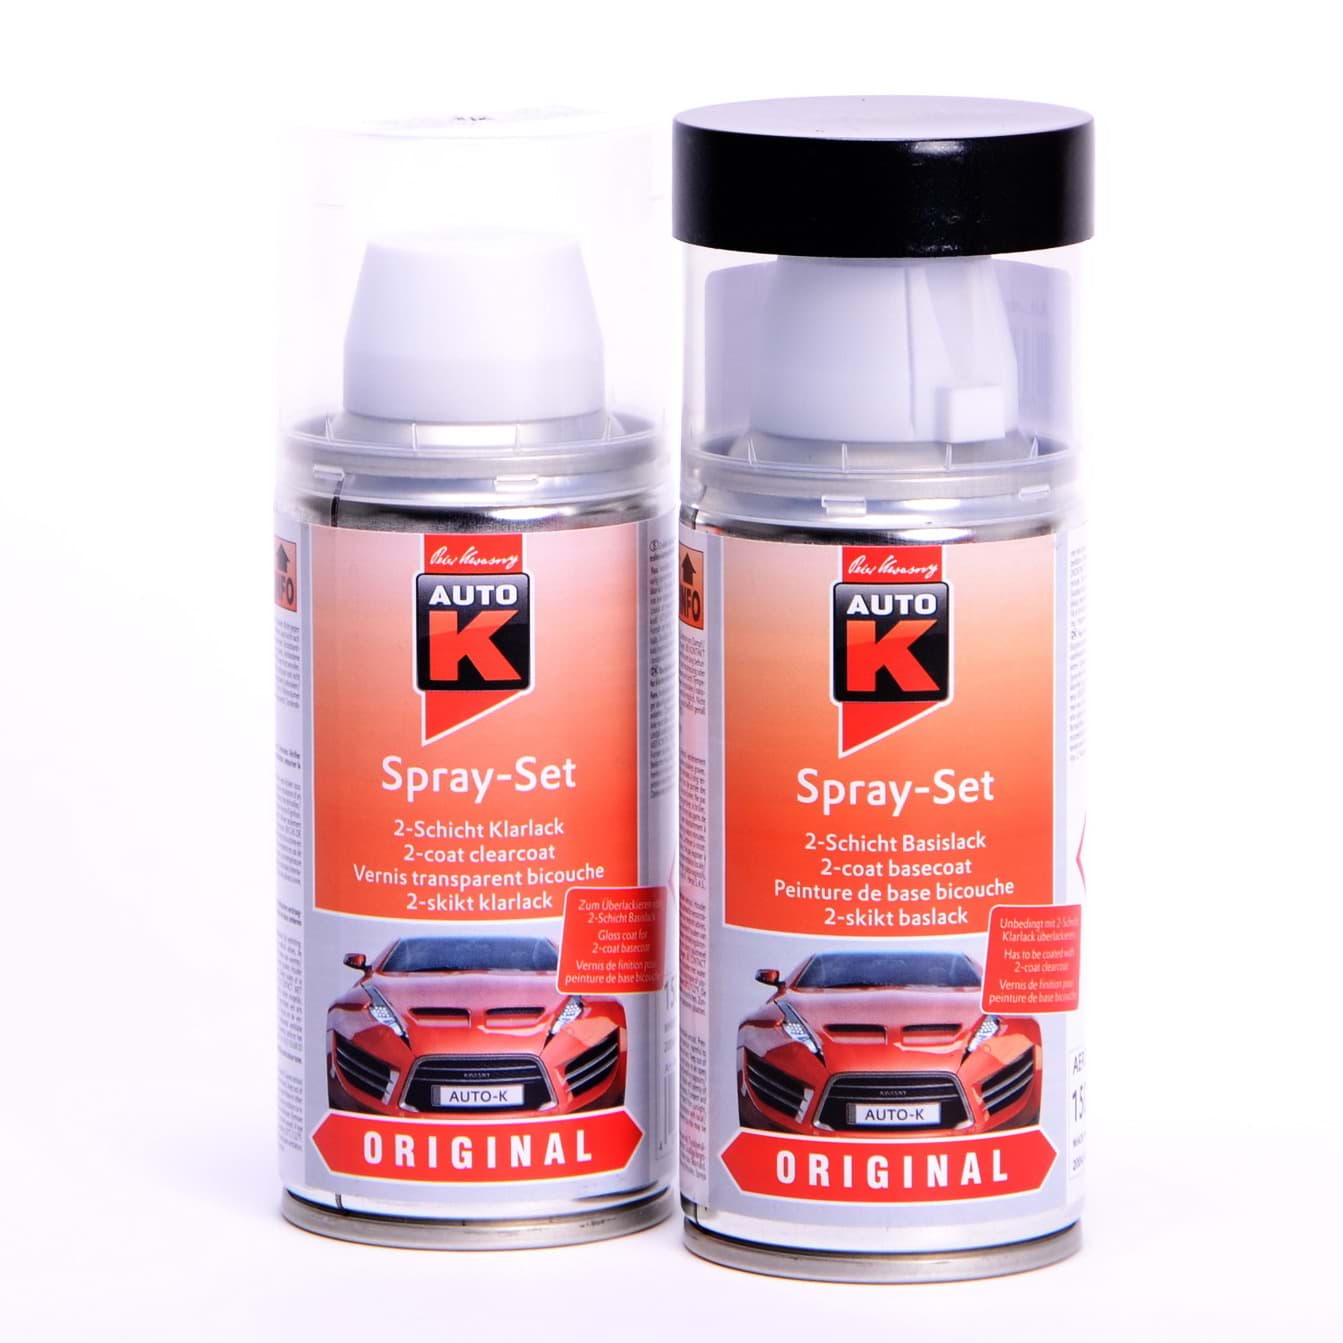 Afbeelding van Auto-K Spray-Set Autolack für Mercedes 582 Imperialrot 23300